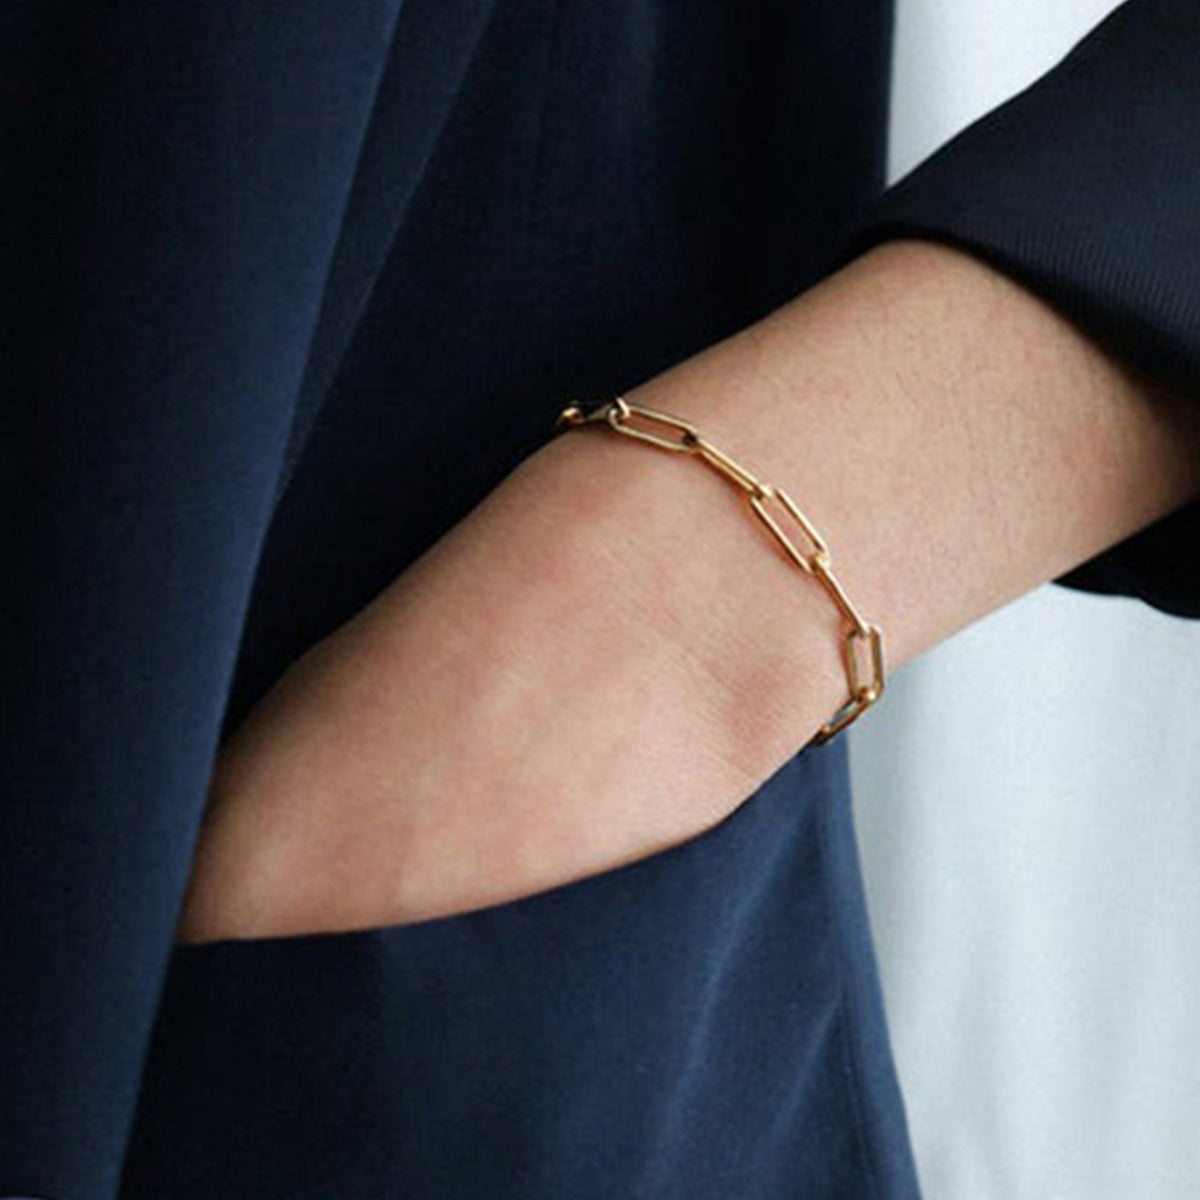 Concise Style Chain Charm Bracelet